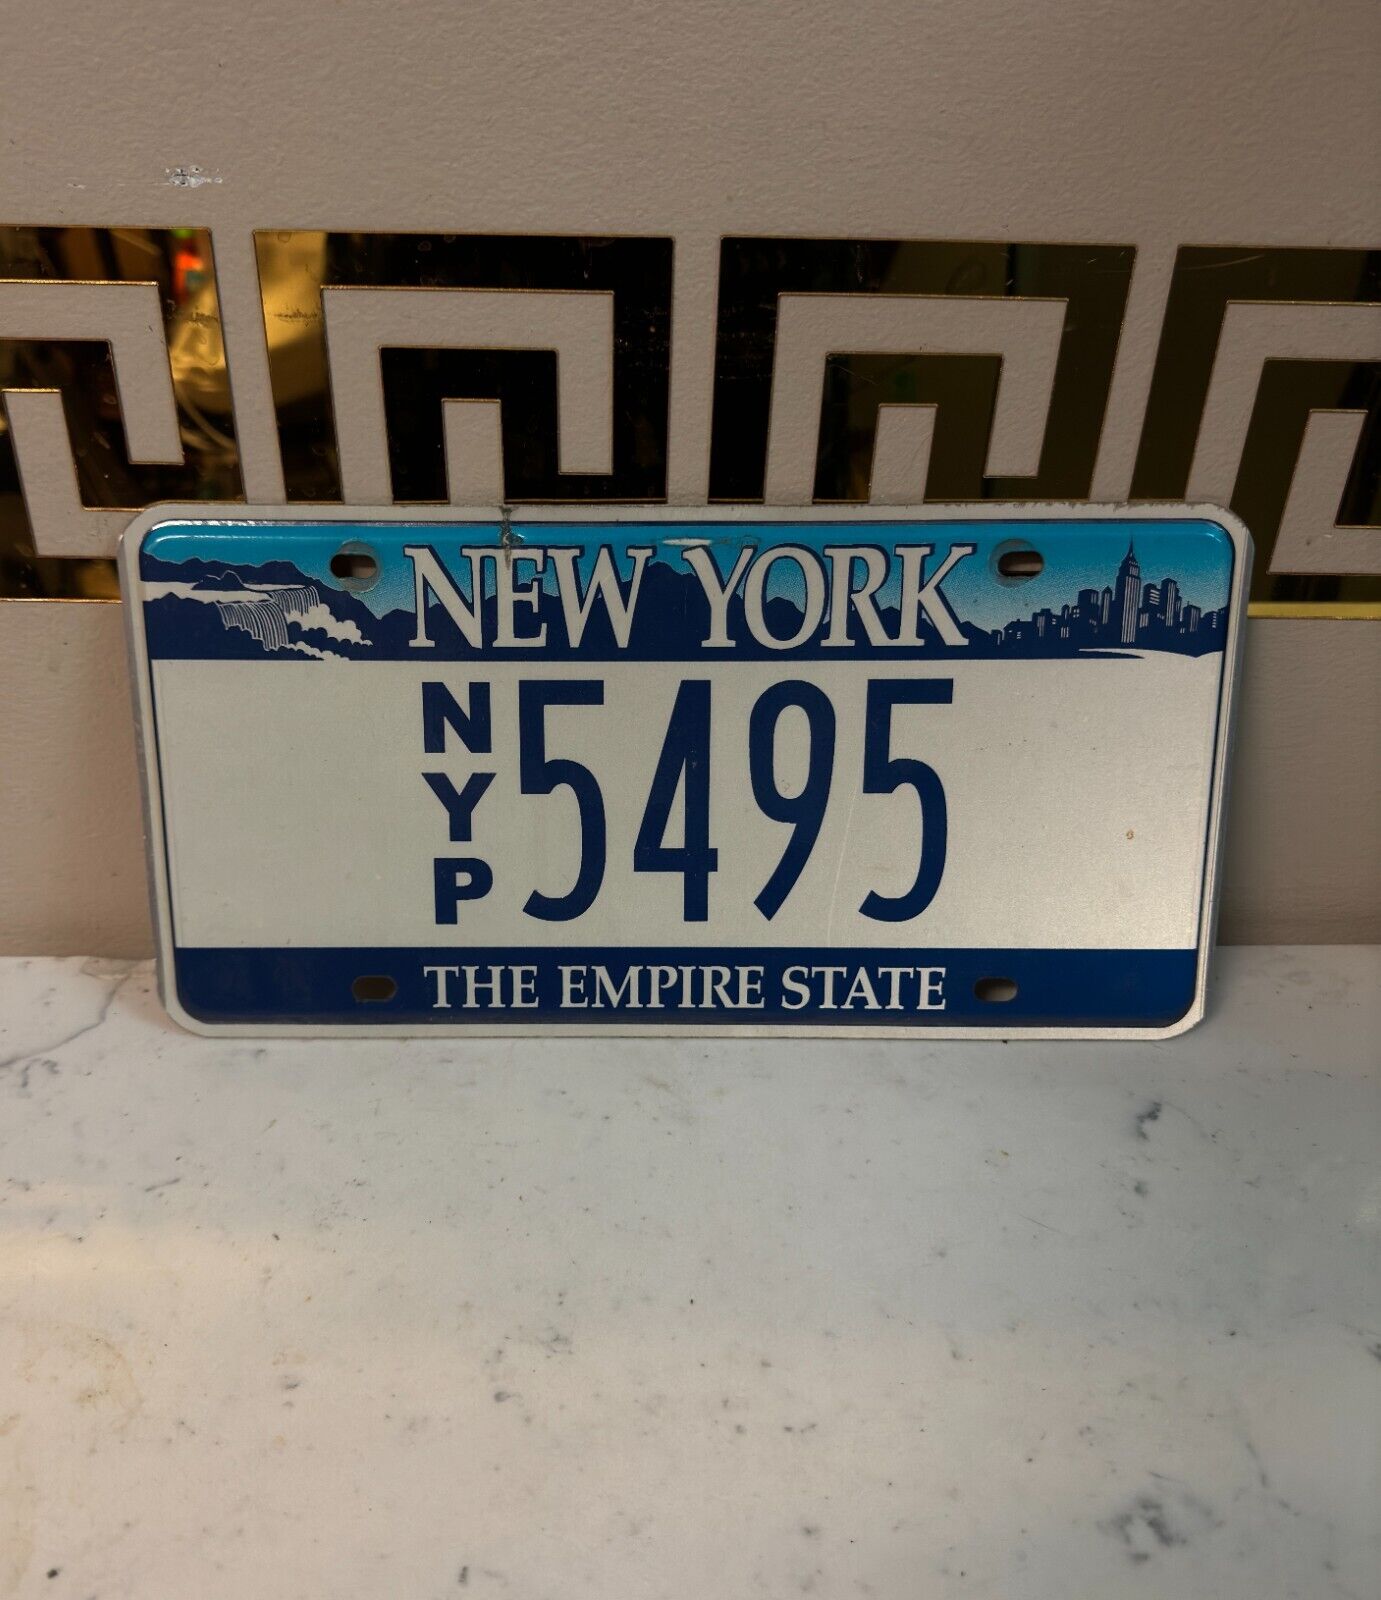 2001-2010 New York Press (NYP #5495) New York DMV License Plate